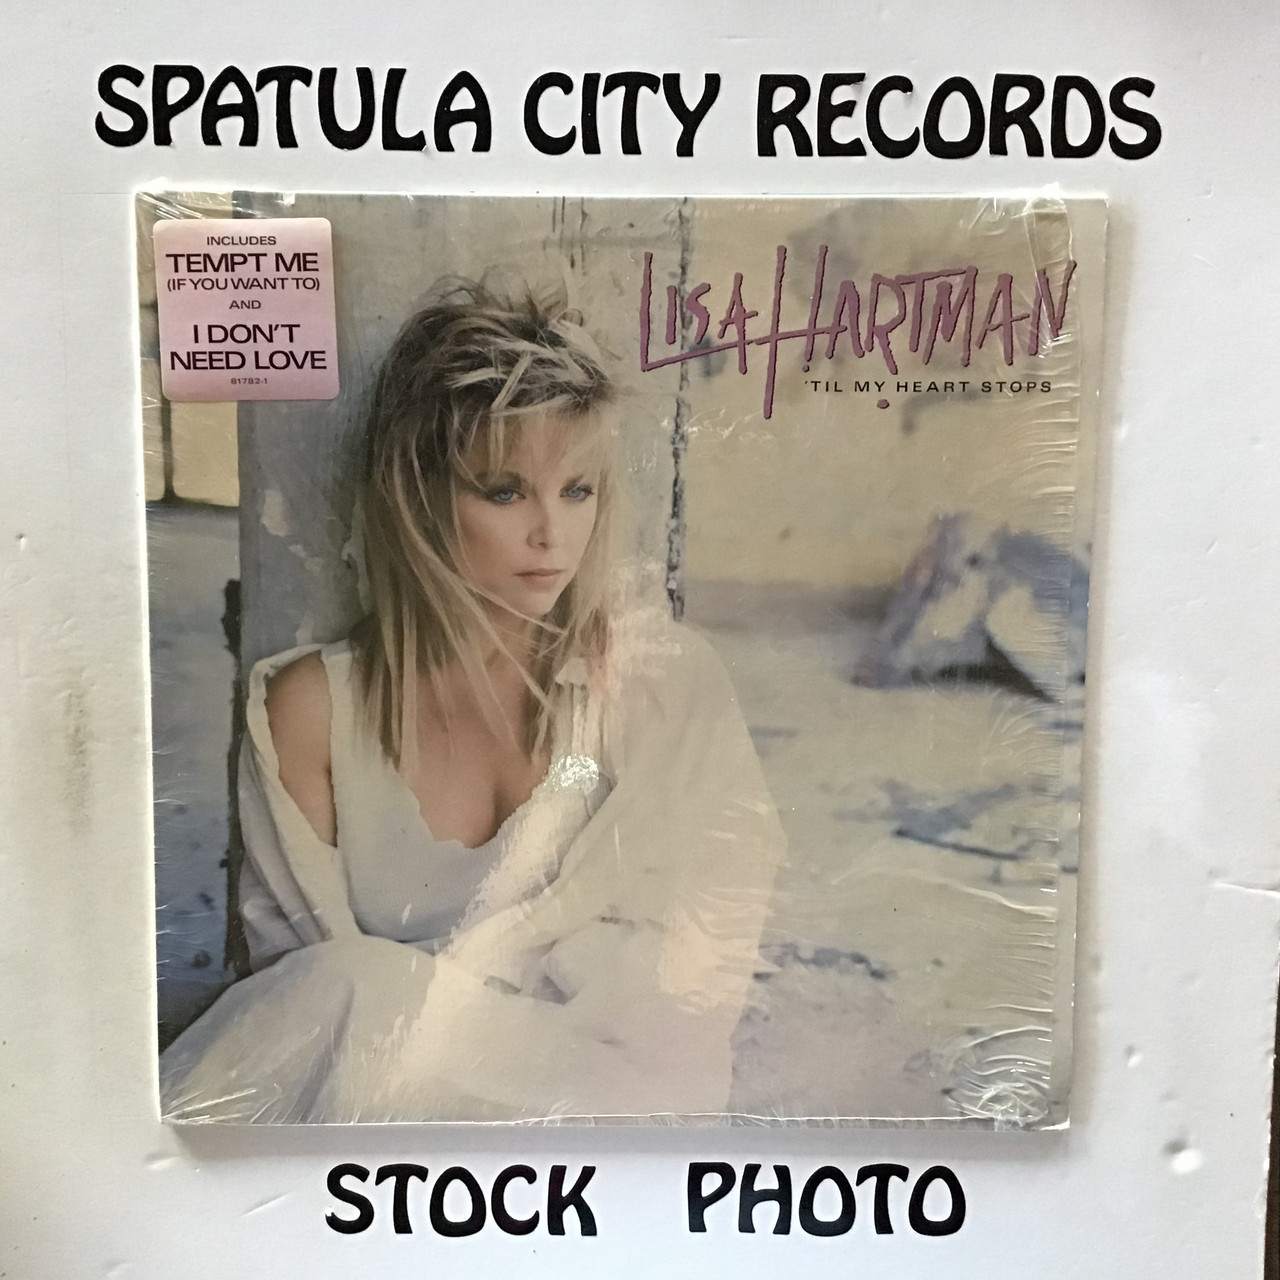 Lisa Hartman - 'Til My Heart Stops - vinyl record LP